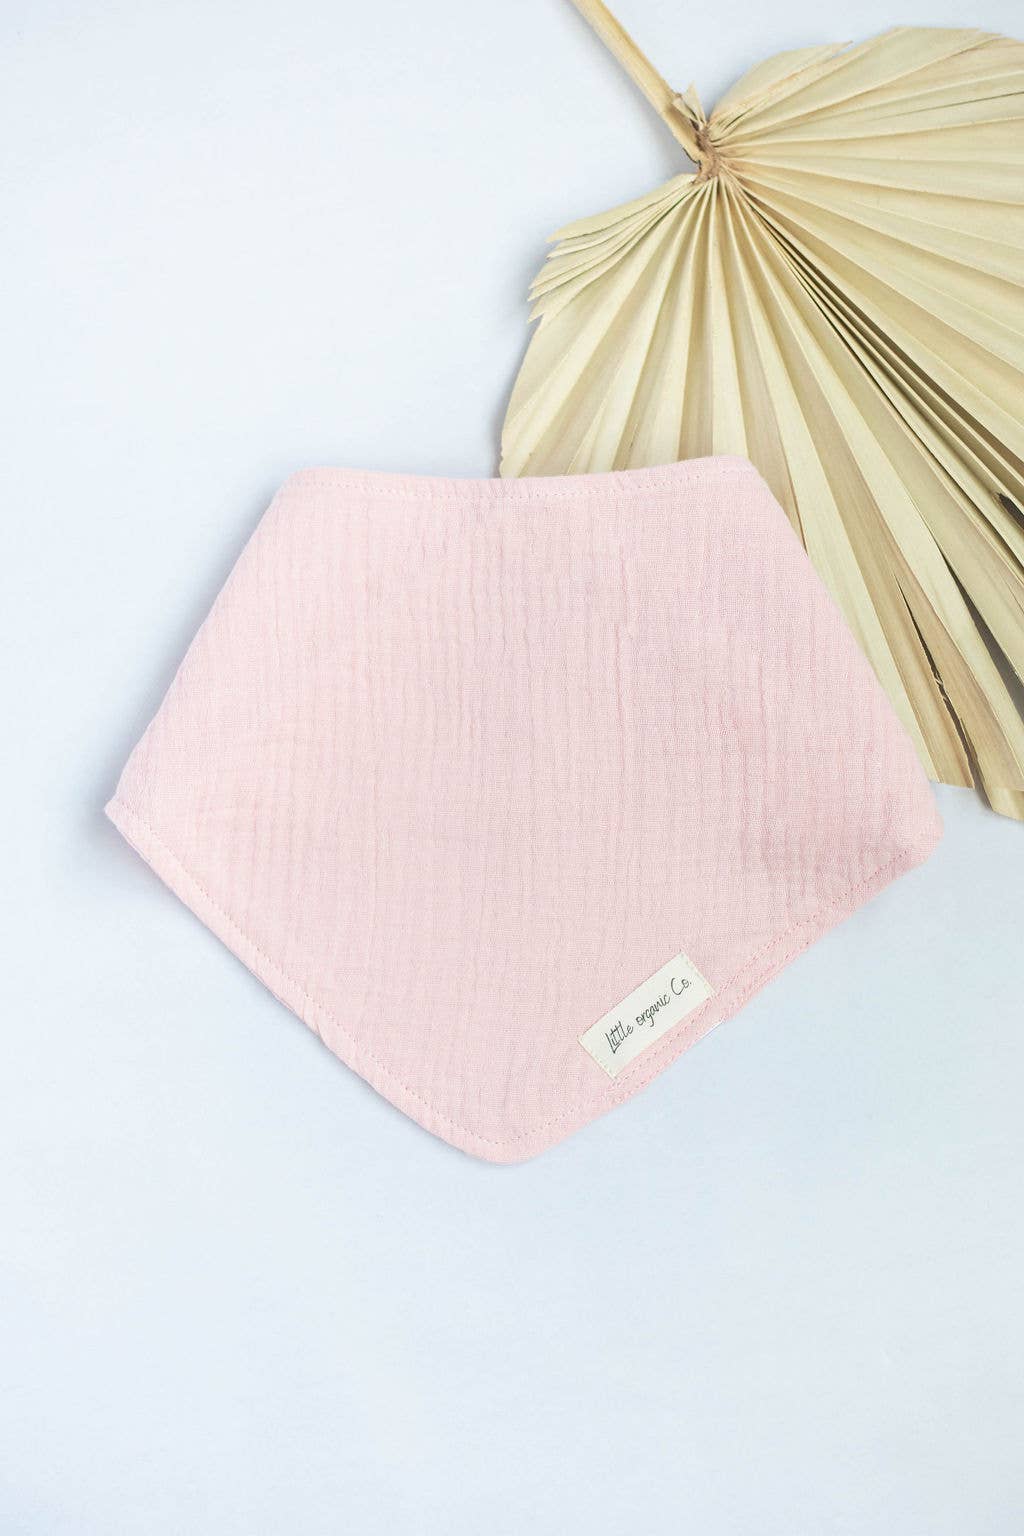 Organic Bandana Baby Bibs (Soft Muslin Fabric) Baby Accessory Maple & Co. Boutique Light Pink  